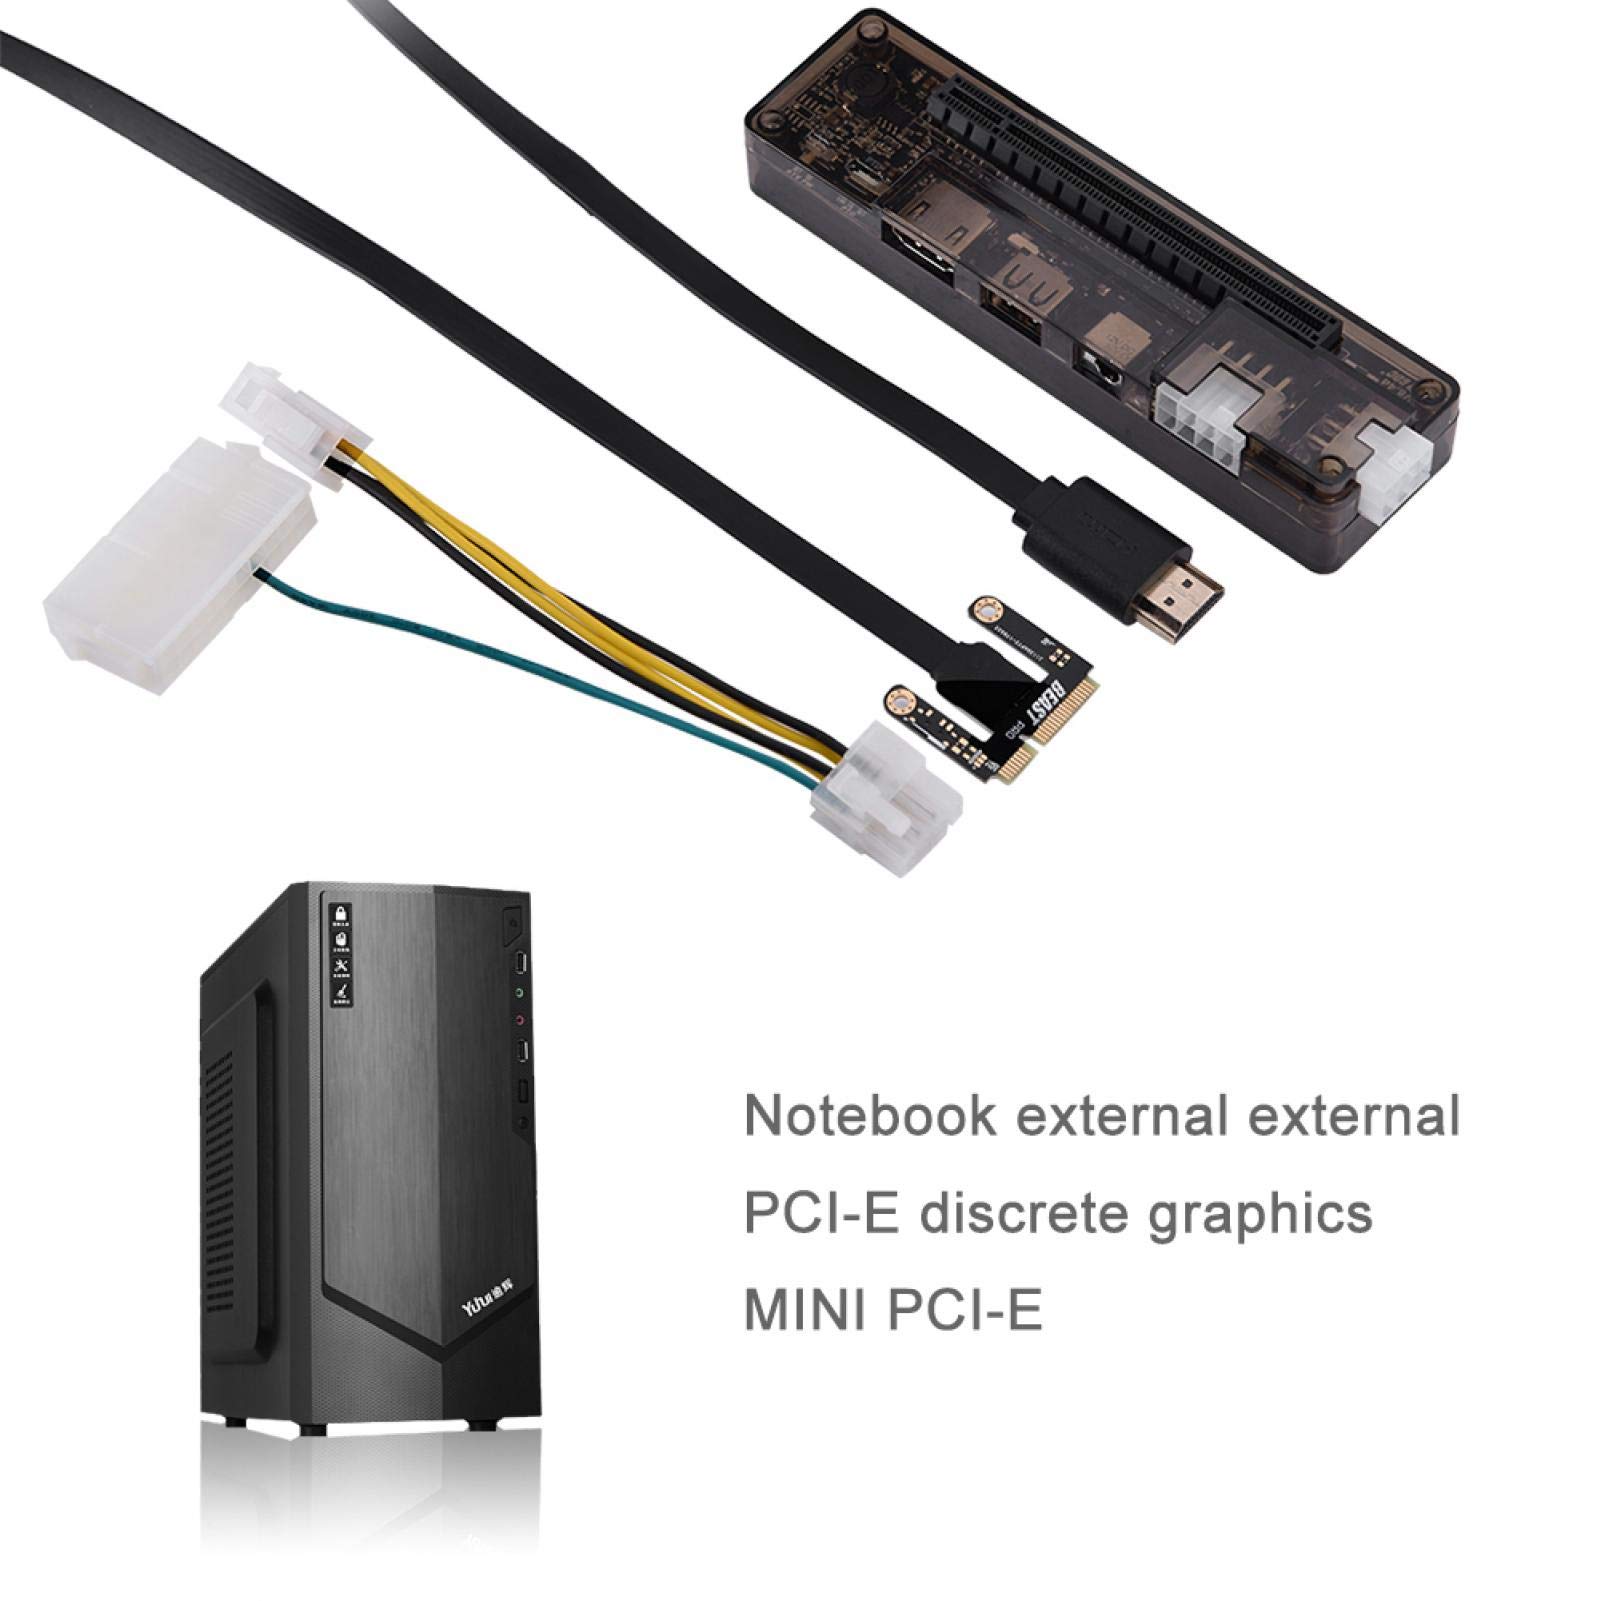 External Gpu express card problem, no Mini PCIE, USB | Tom's Guide Forum